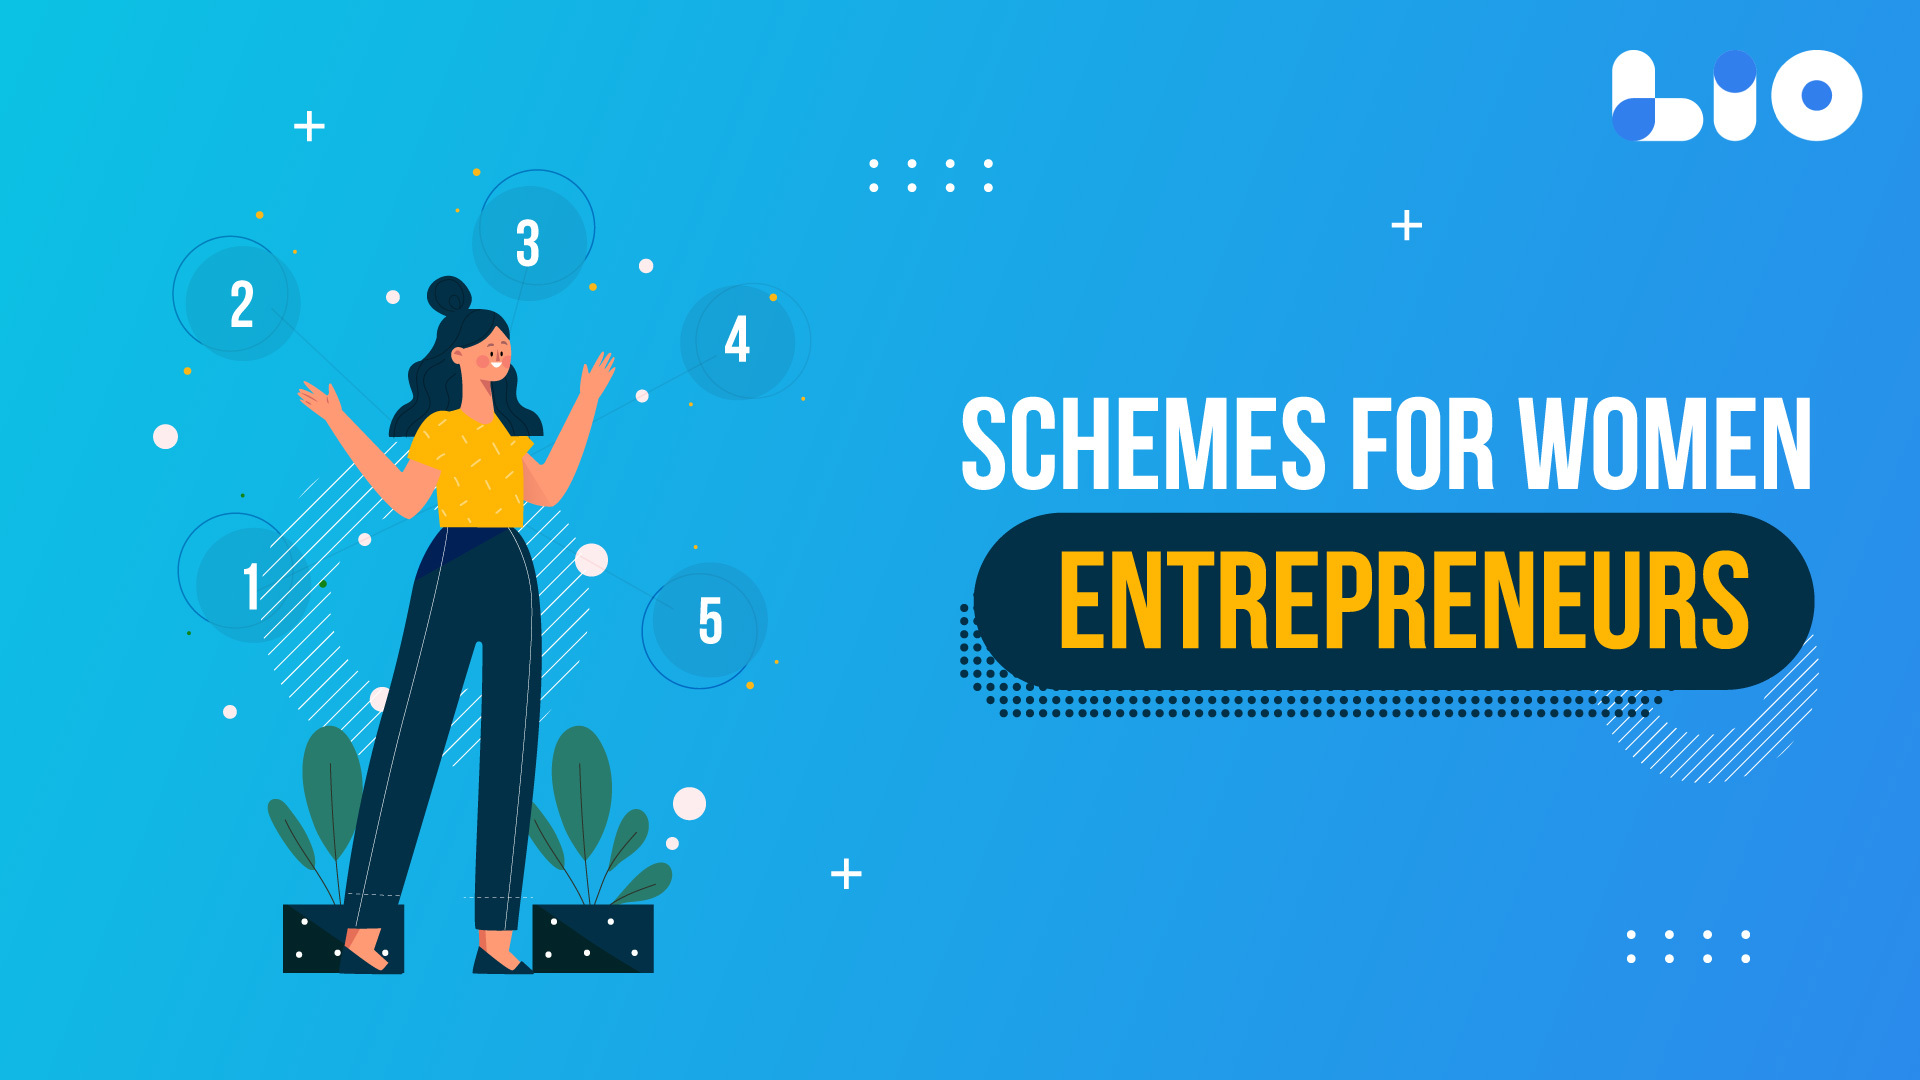 11 Schemes for Women Entrepreneurs to Kickstart Their Business